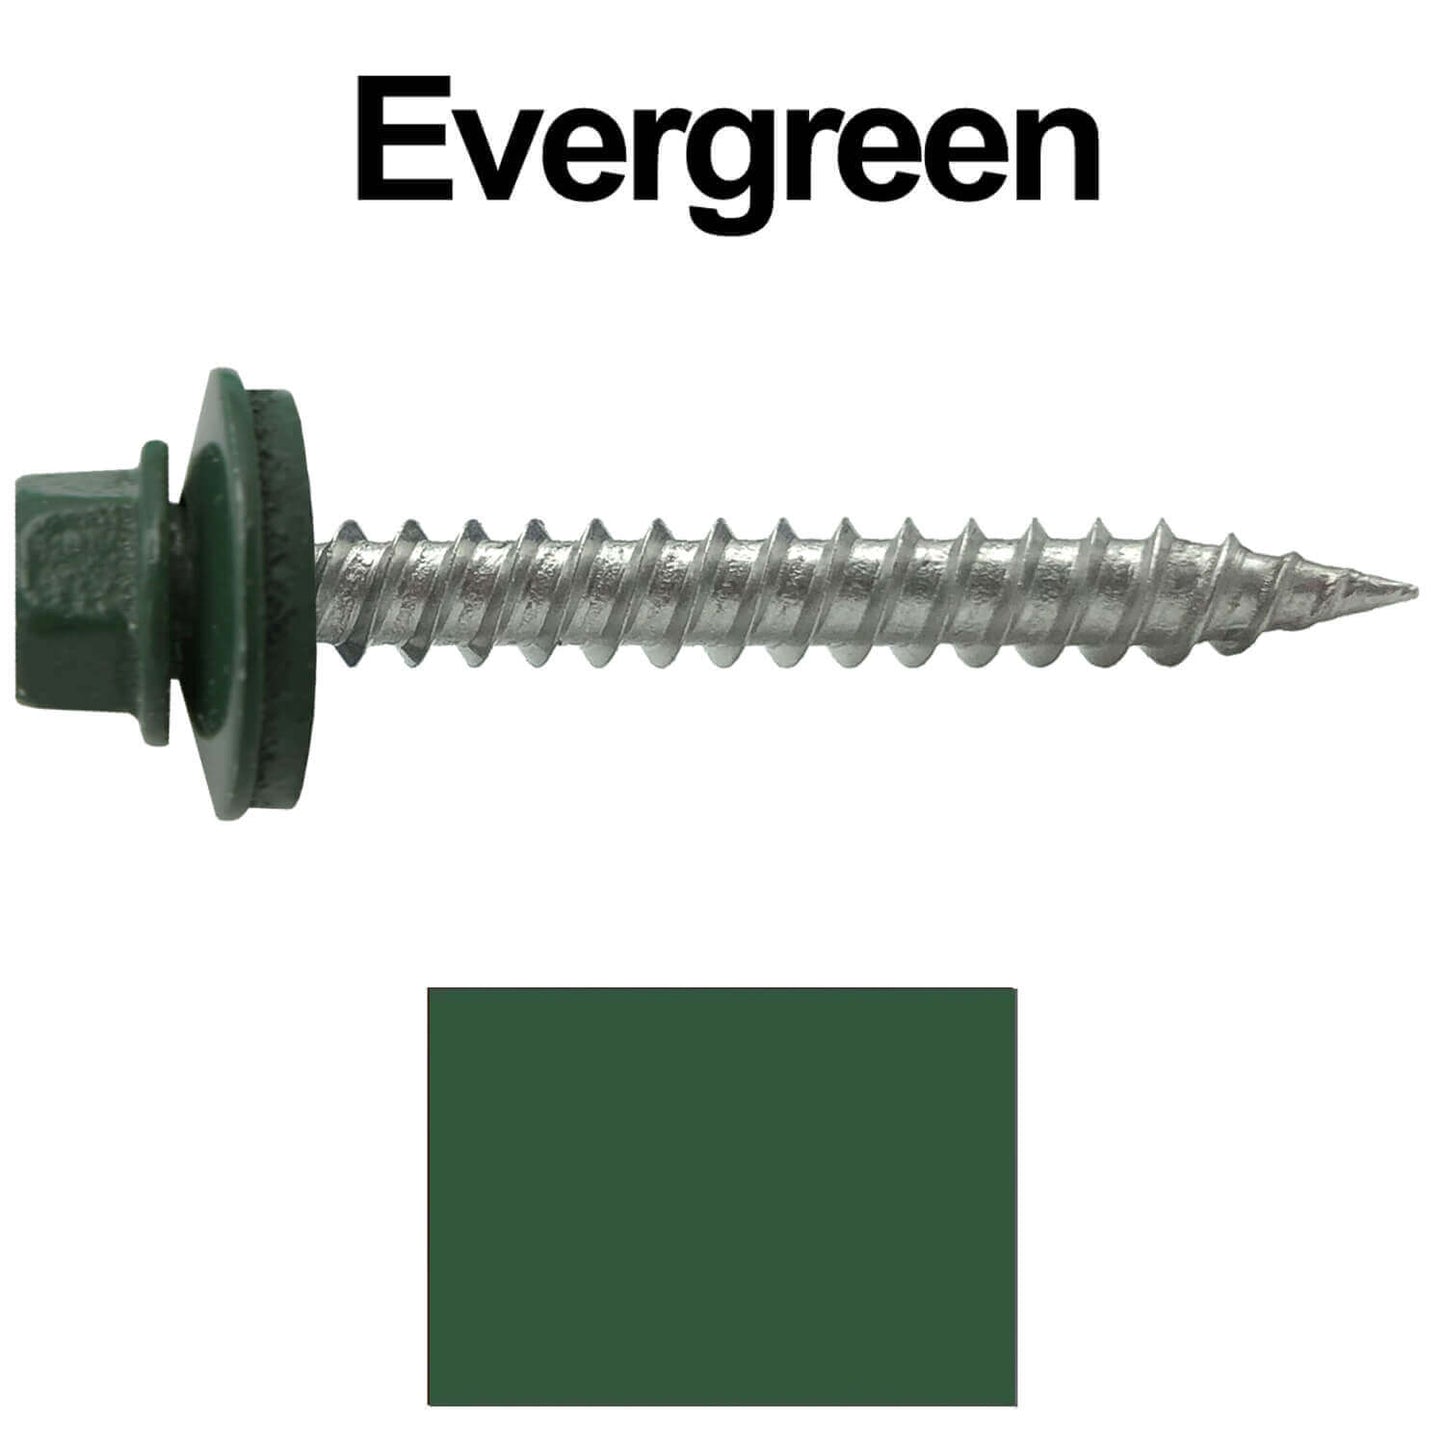 9 112 evergreen main